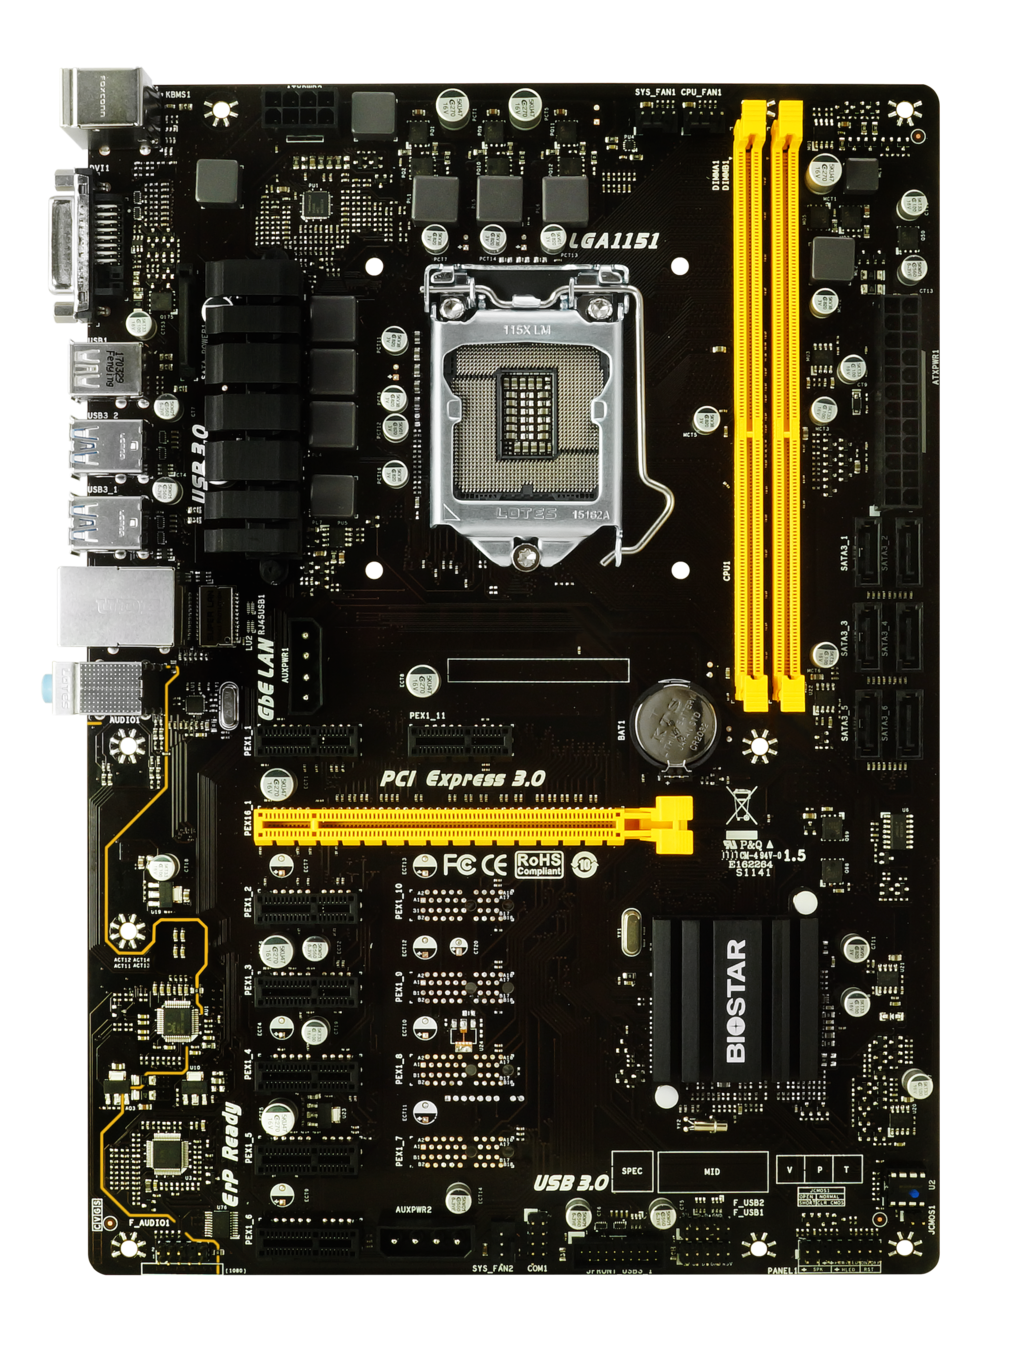 TB250-BTC+ INTEL Socket 1151 gaming motherboard